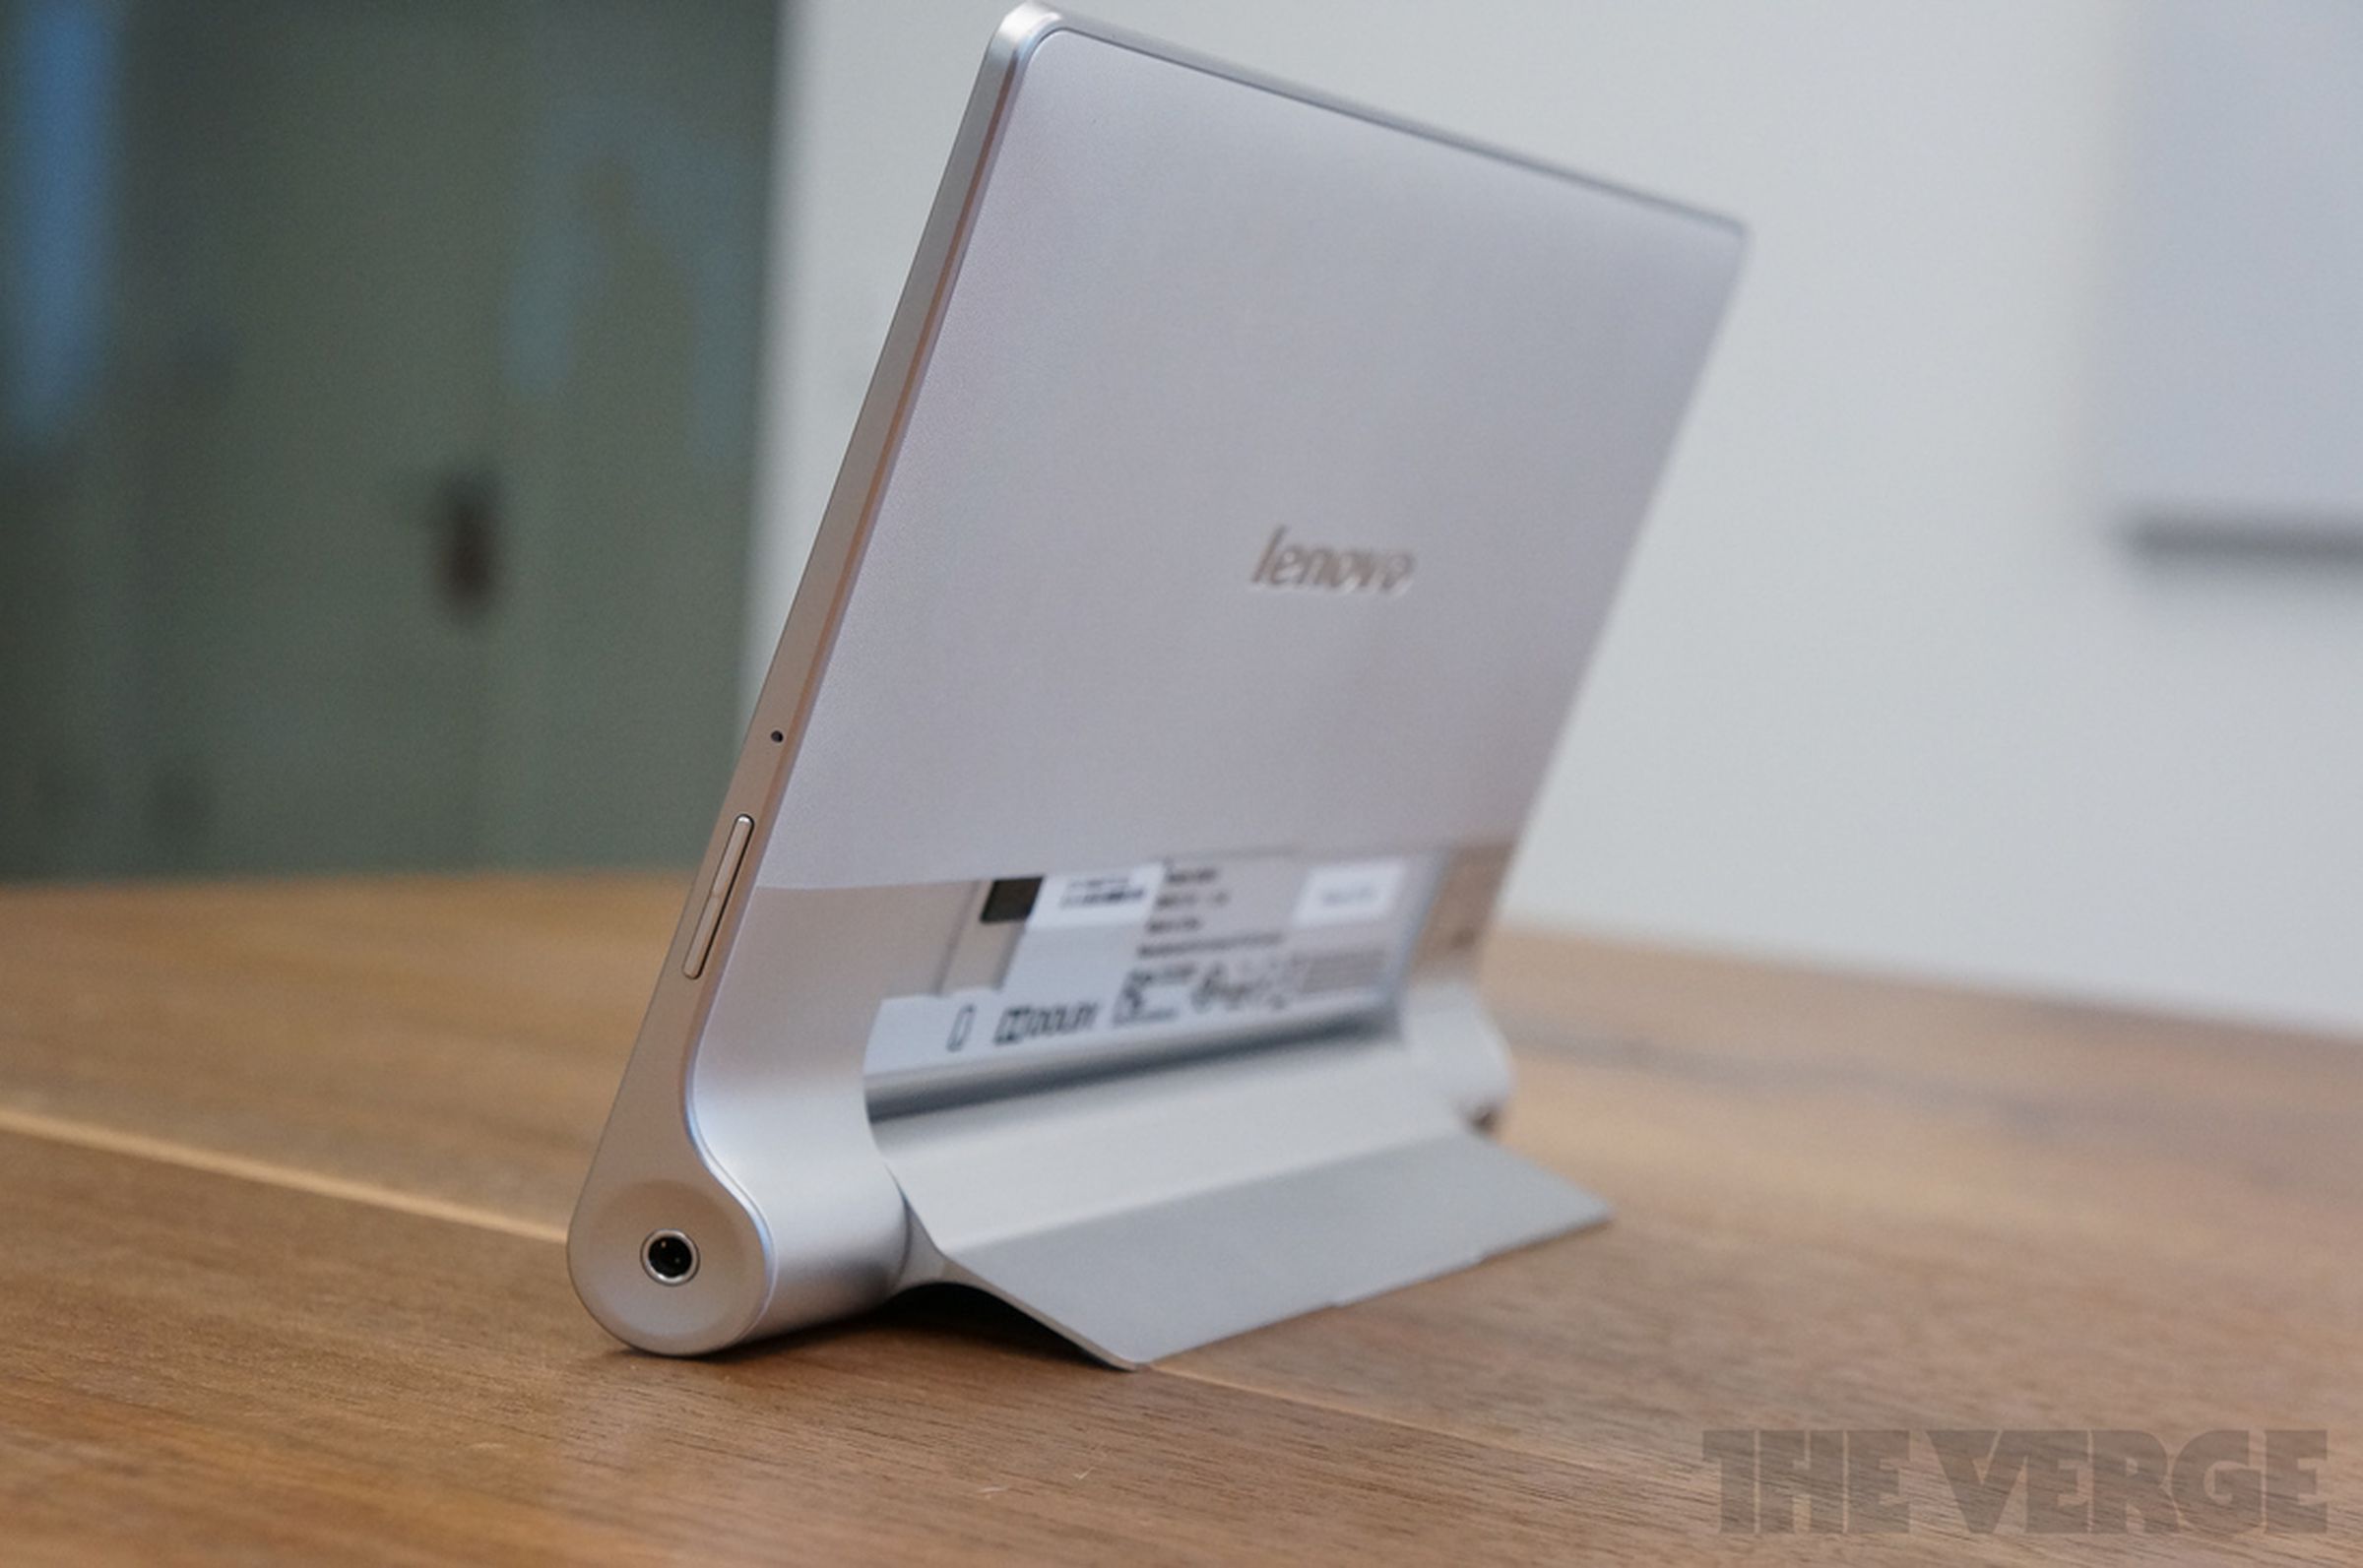 Lenovo Yoga Tablet hands-on